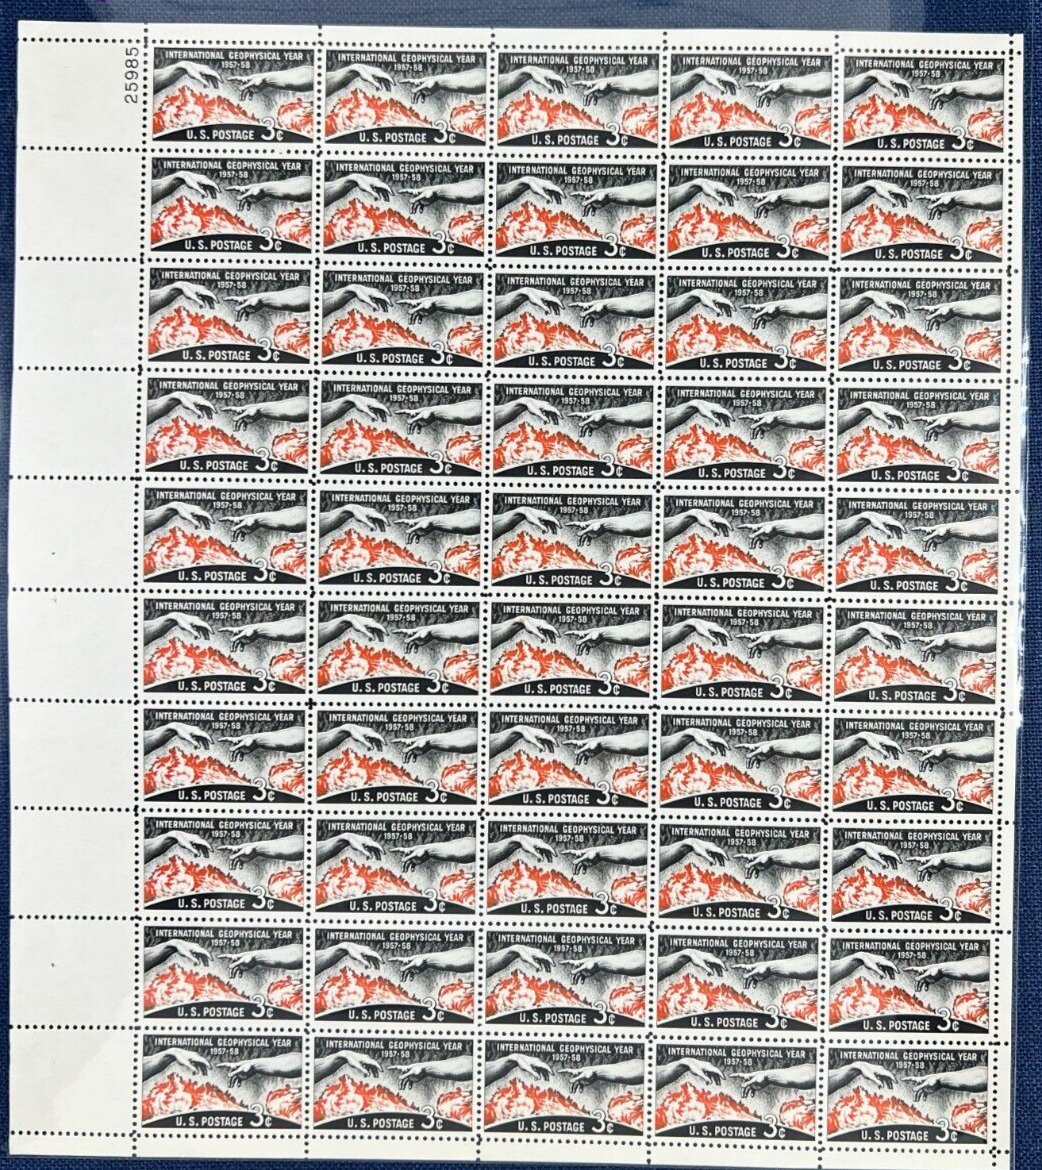 Scott 1107 - 1958 Geophysical Year Full Sheet of 50 US 3¢ Stamps MHN